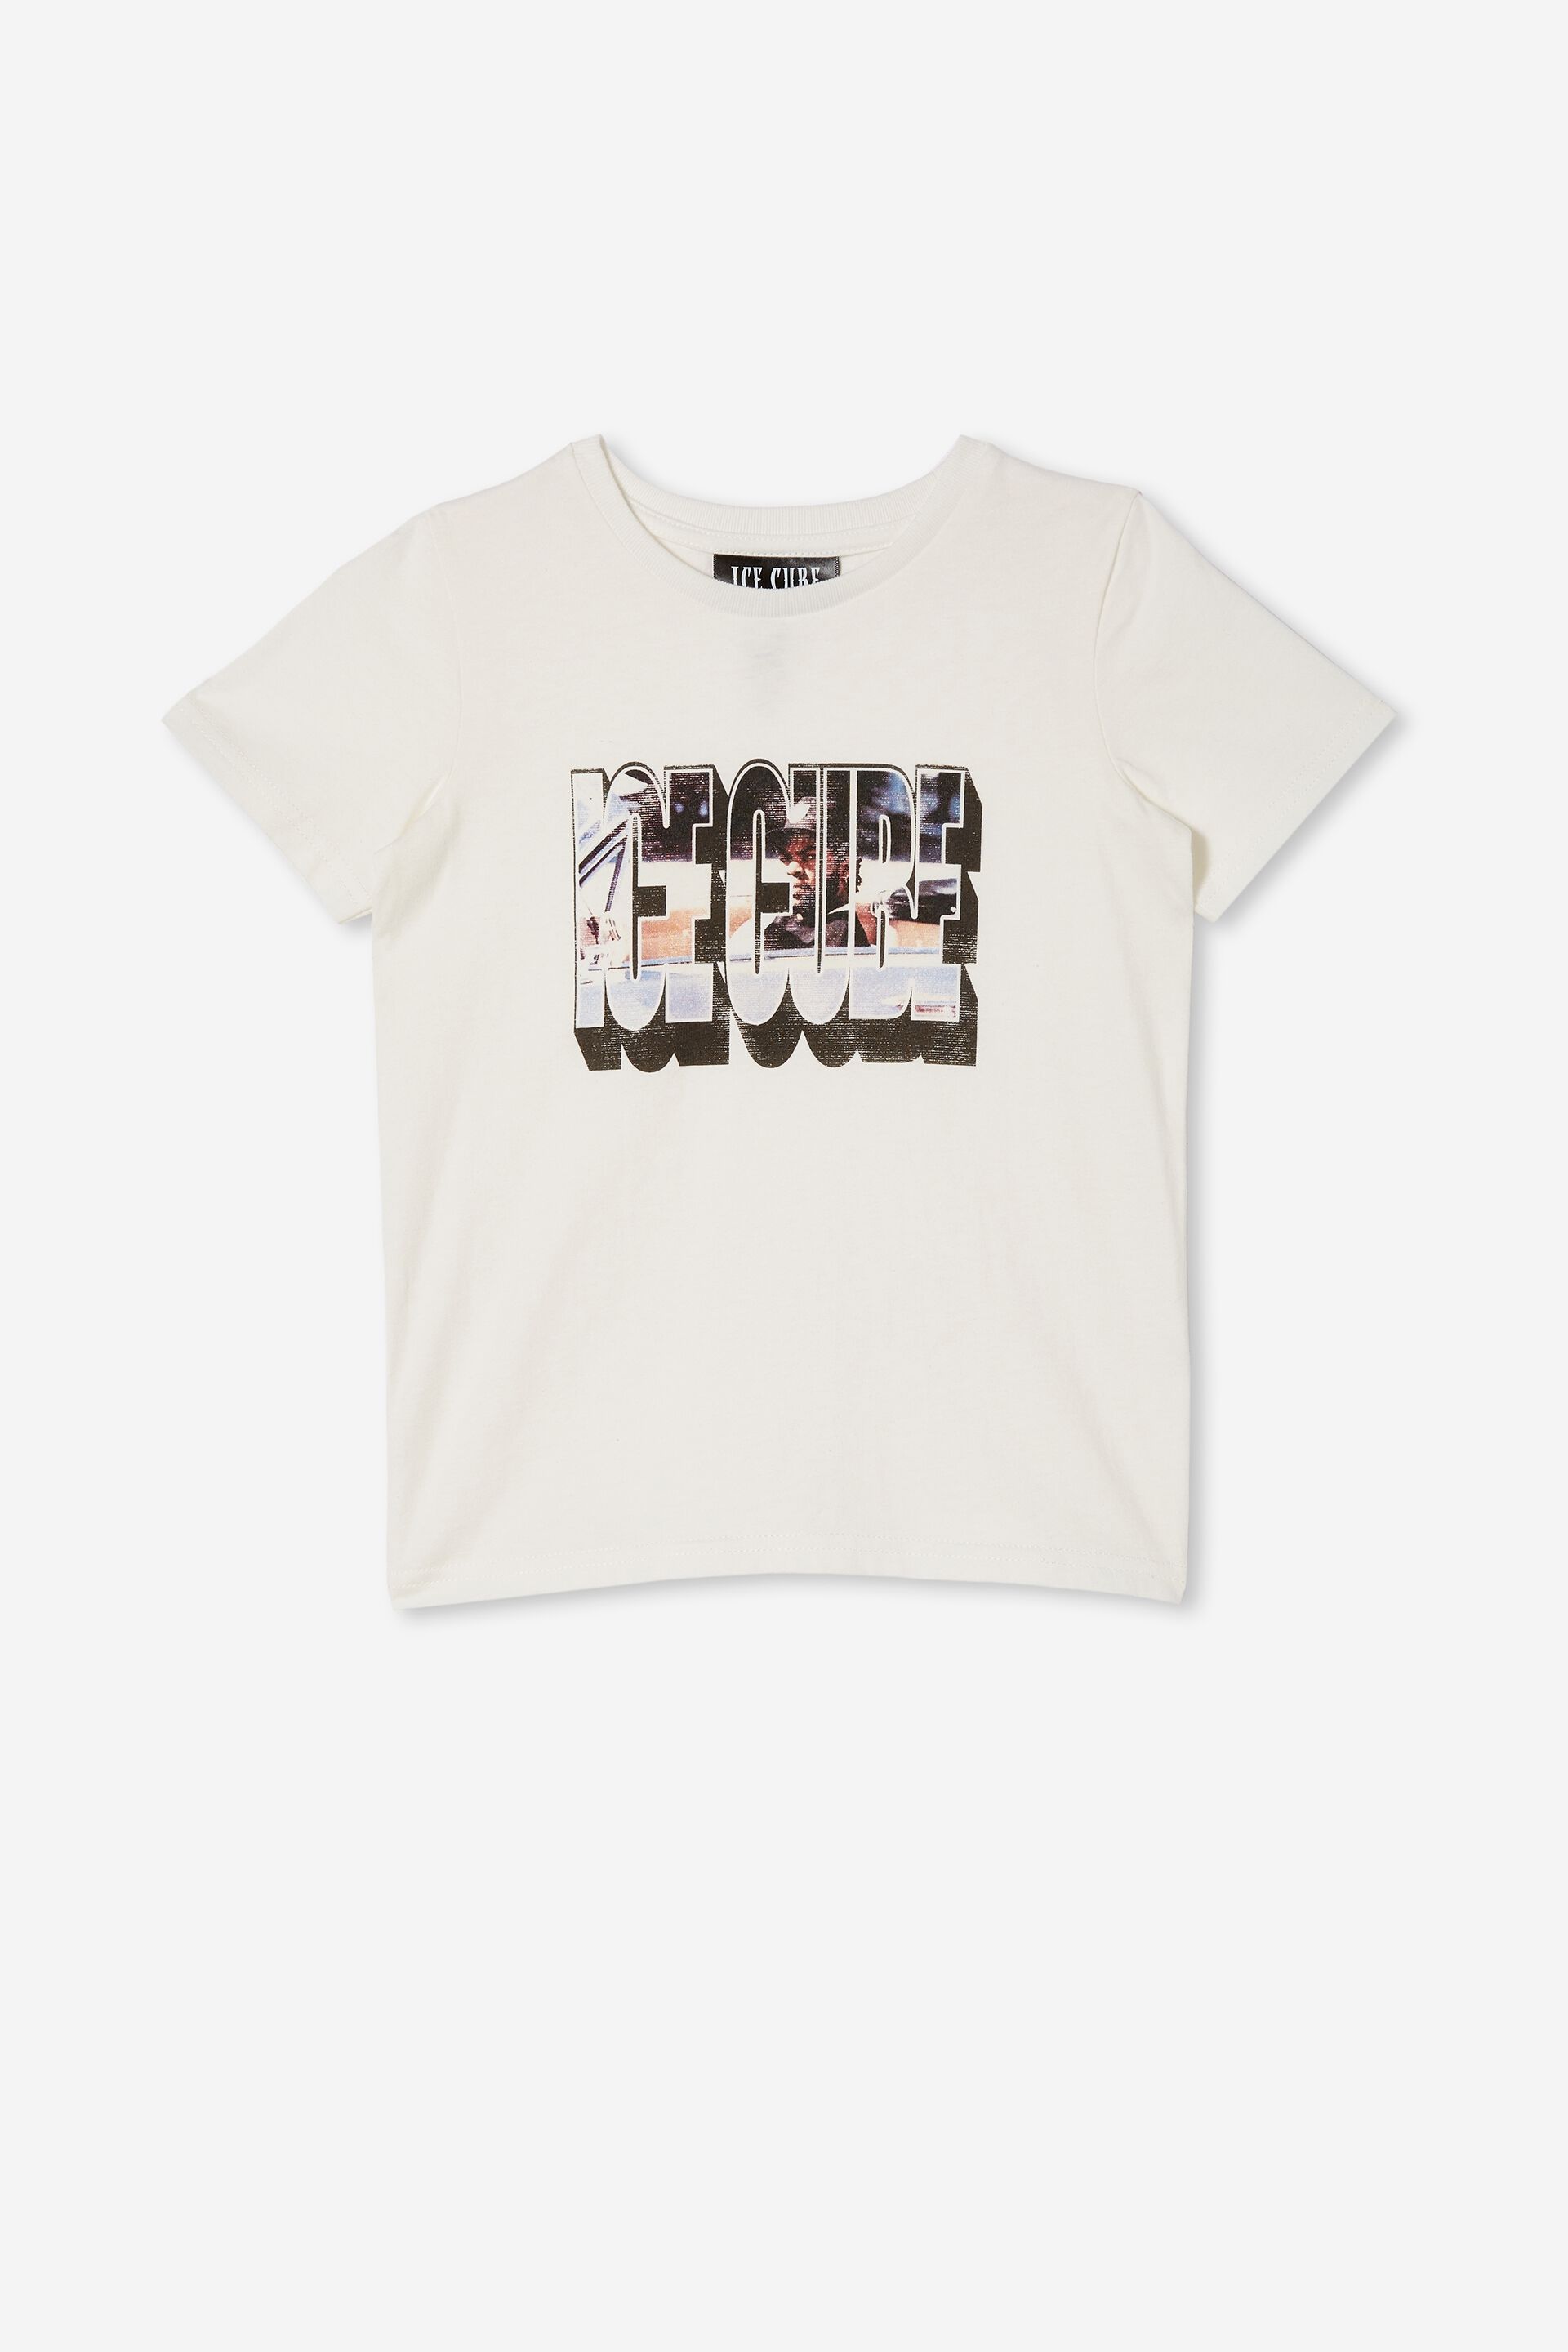 Boys 2-14 Tops & T-Shirts | Short Sleeve License1 Tee - FJ61707